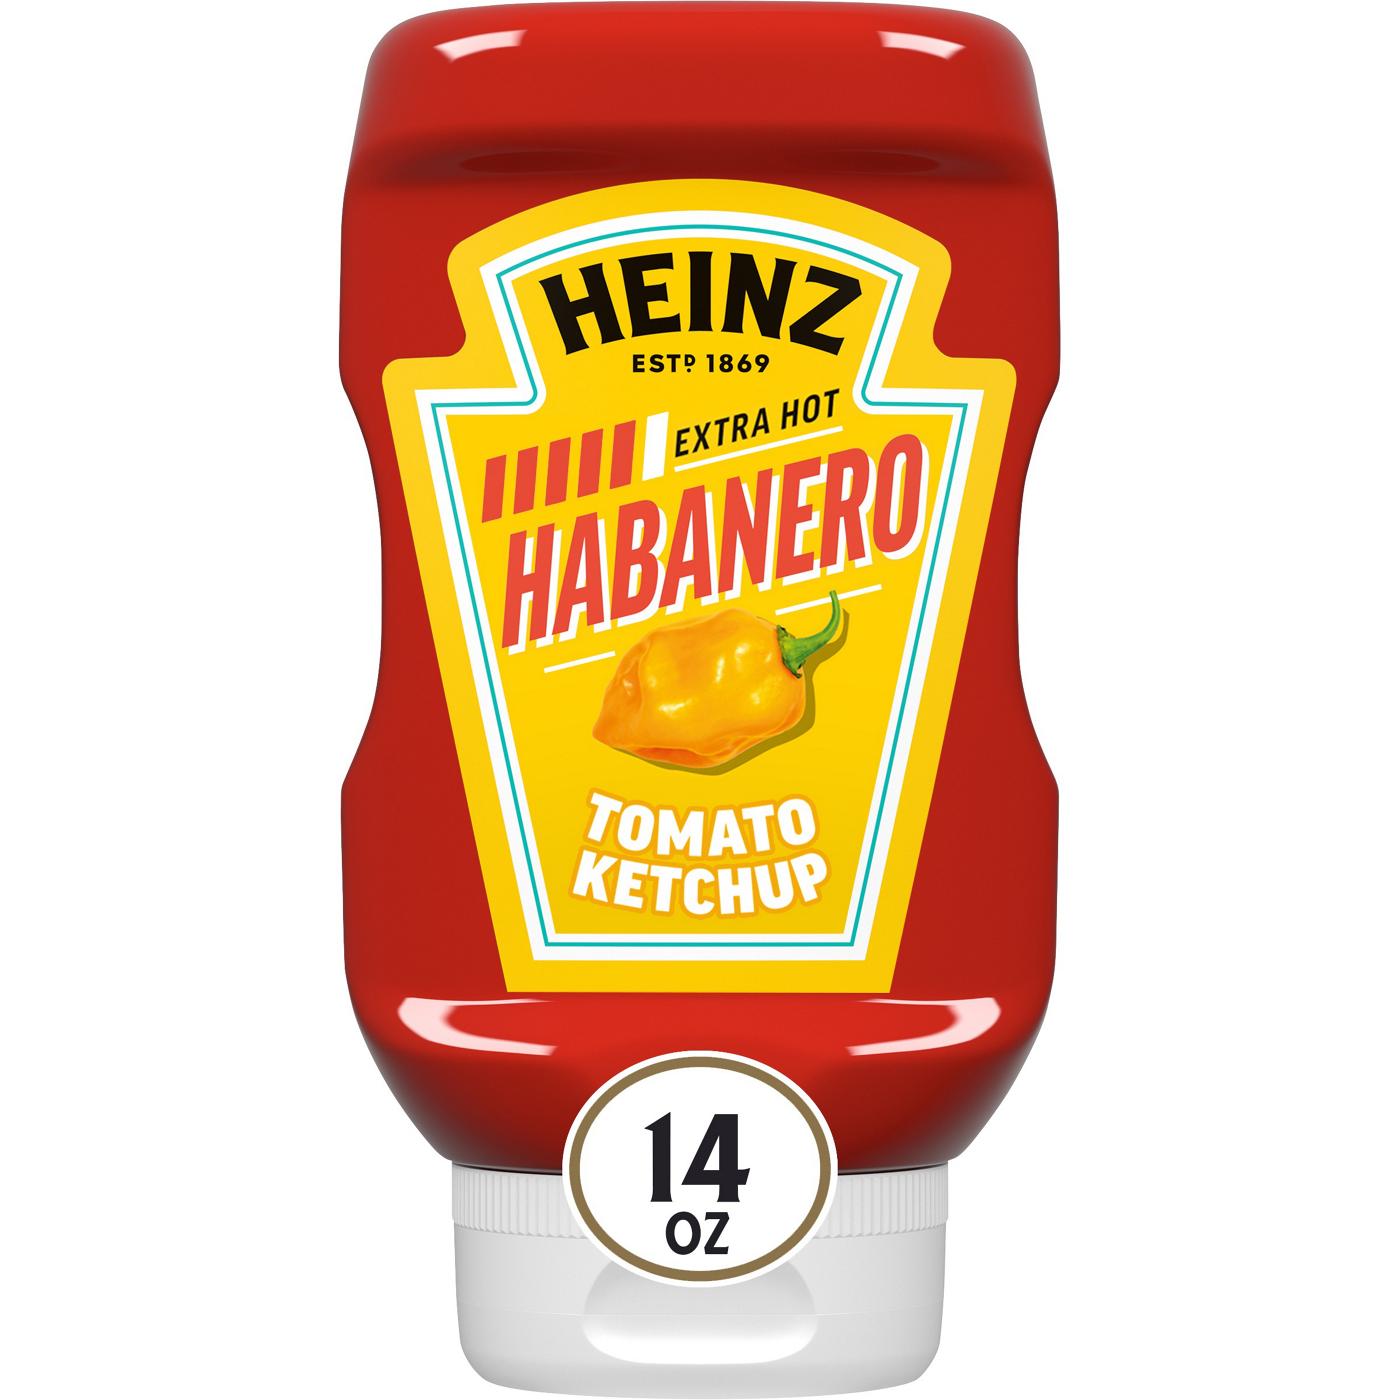 Heinz Habanero Spicy Ketchup; image 2 of 3